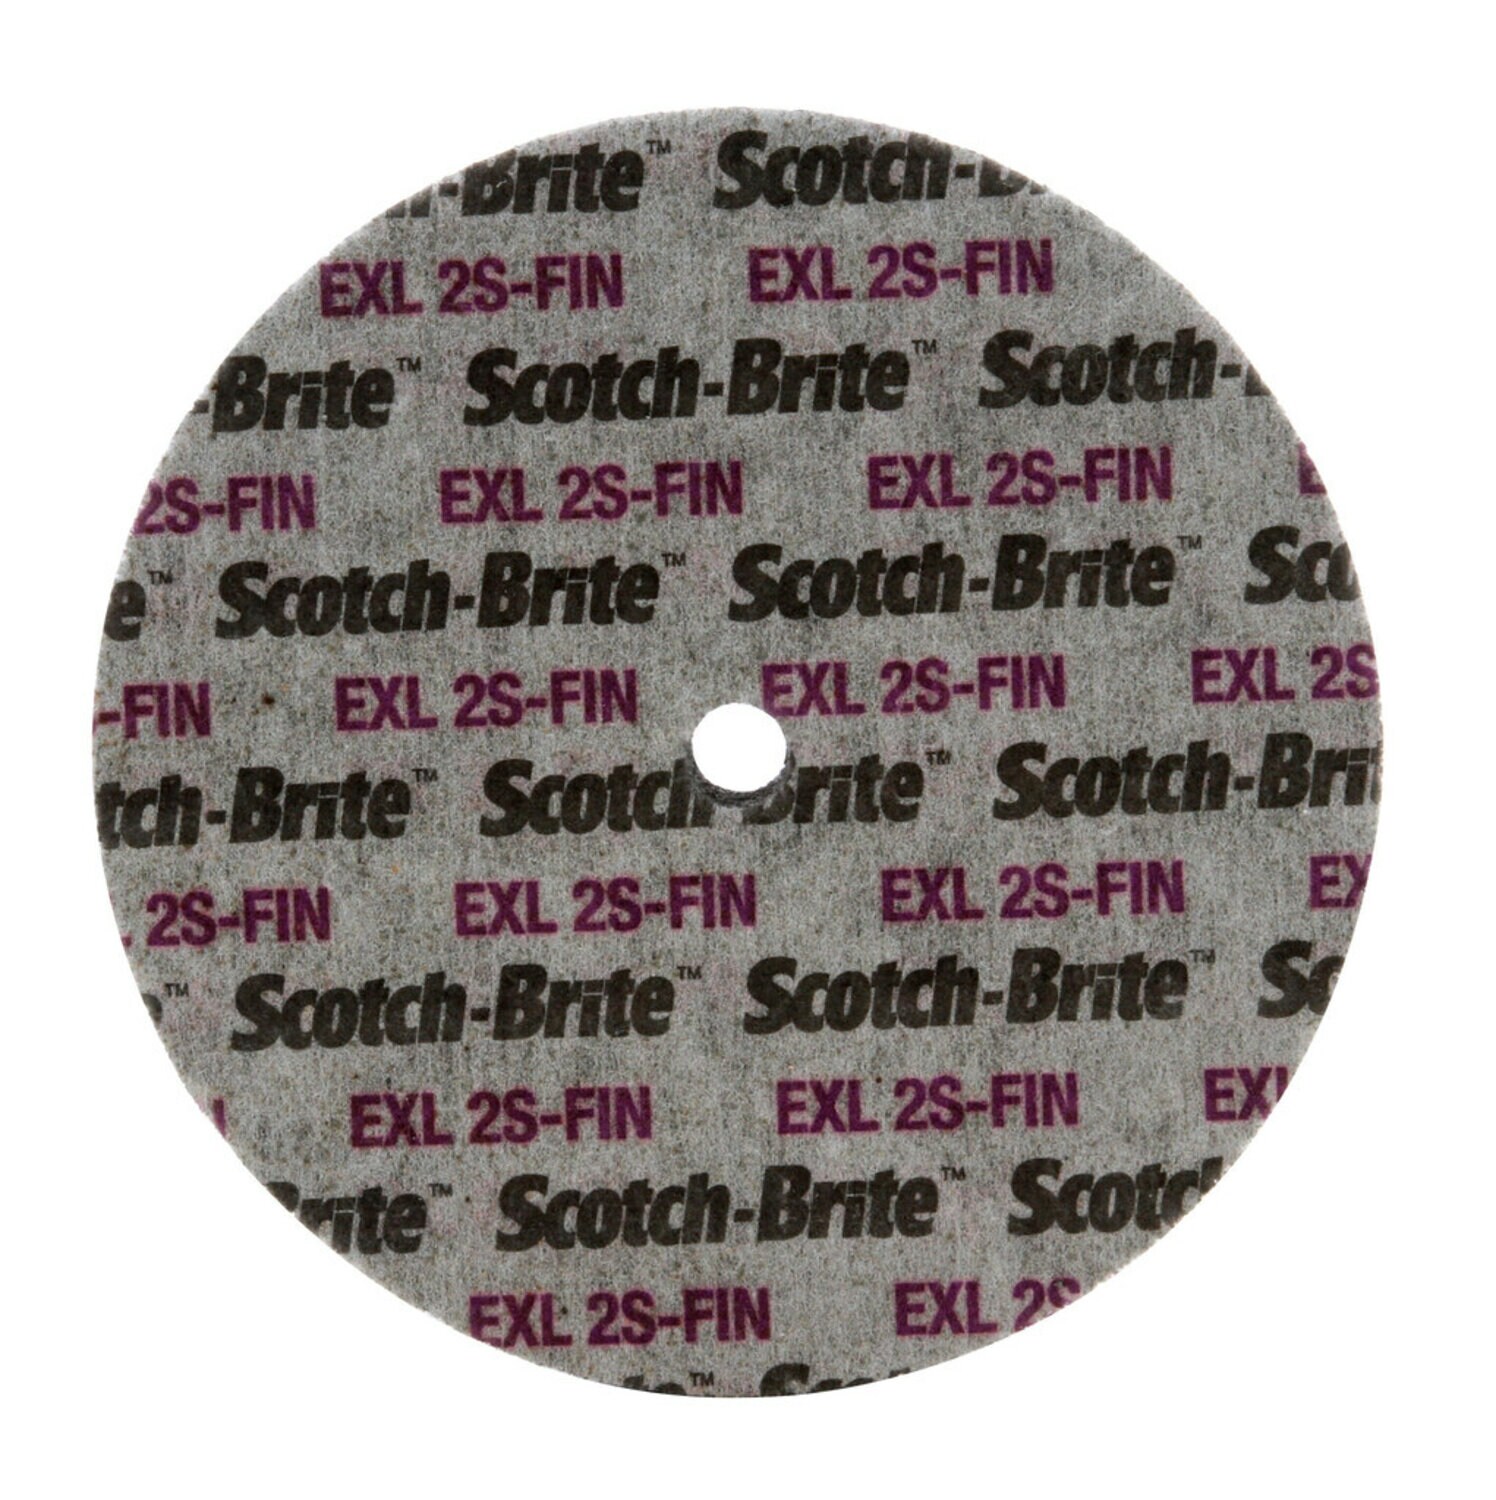 7010300820 - Scotch-Brite EXL Unitized Wheel, XL-UW, 2S Fine, 6 in x 1 in x 3/4 in,
2 ea/Case